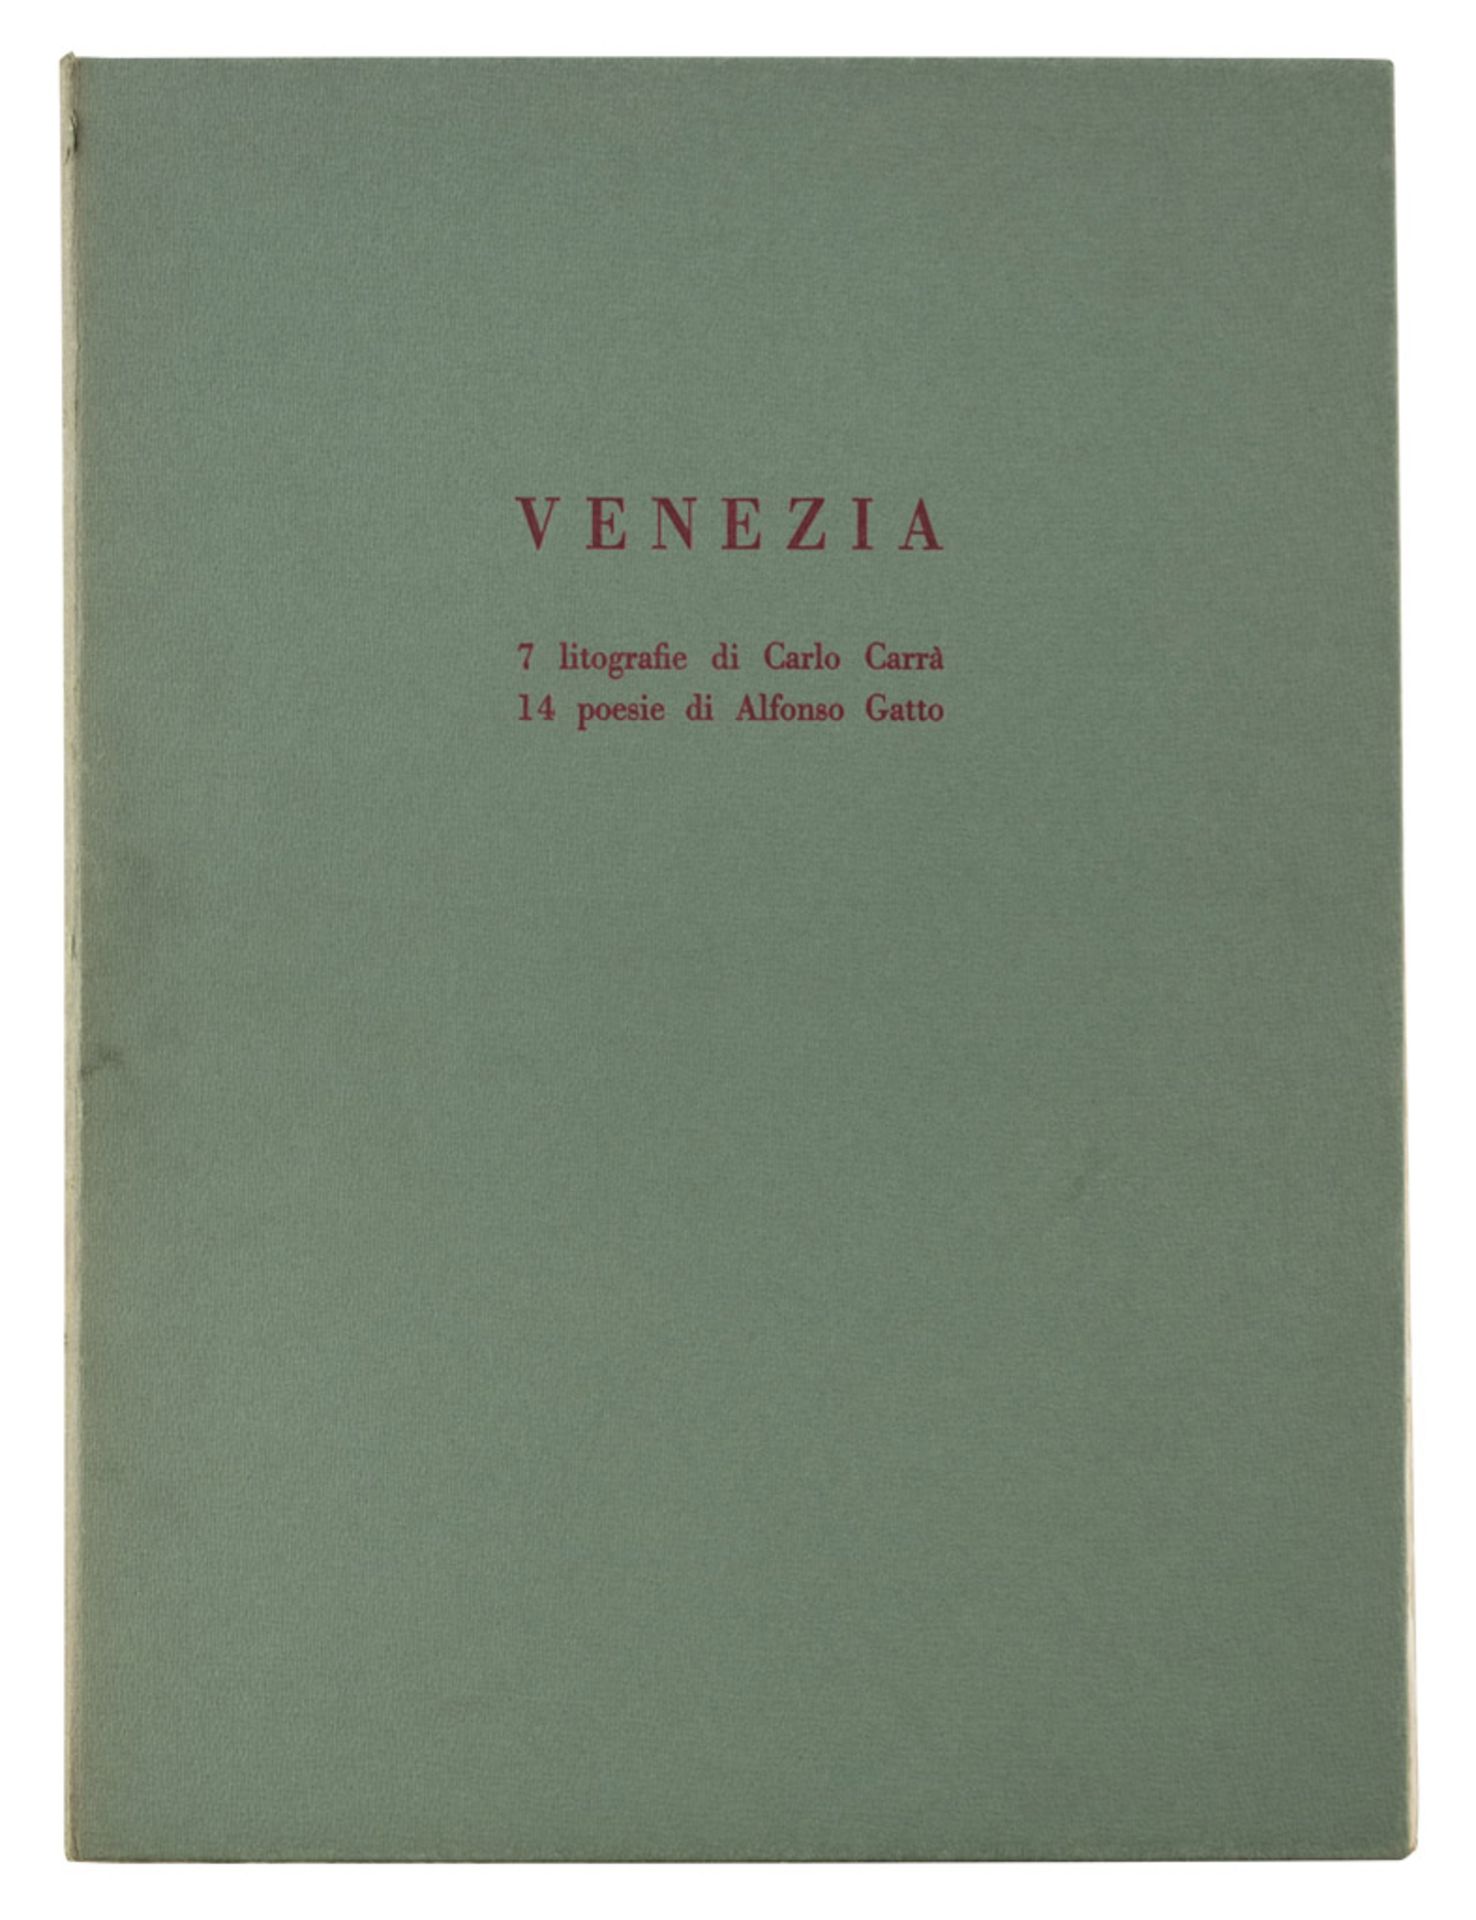 CARTELLA 'VENEZIA' DI CARLO CARRÁ contenente sette litografie di Carlo Carrà, con quattordici poesie - Bild 2 aus 2